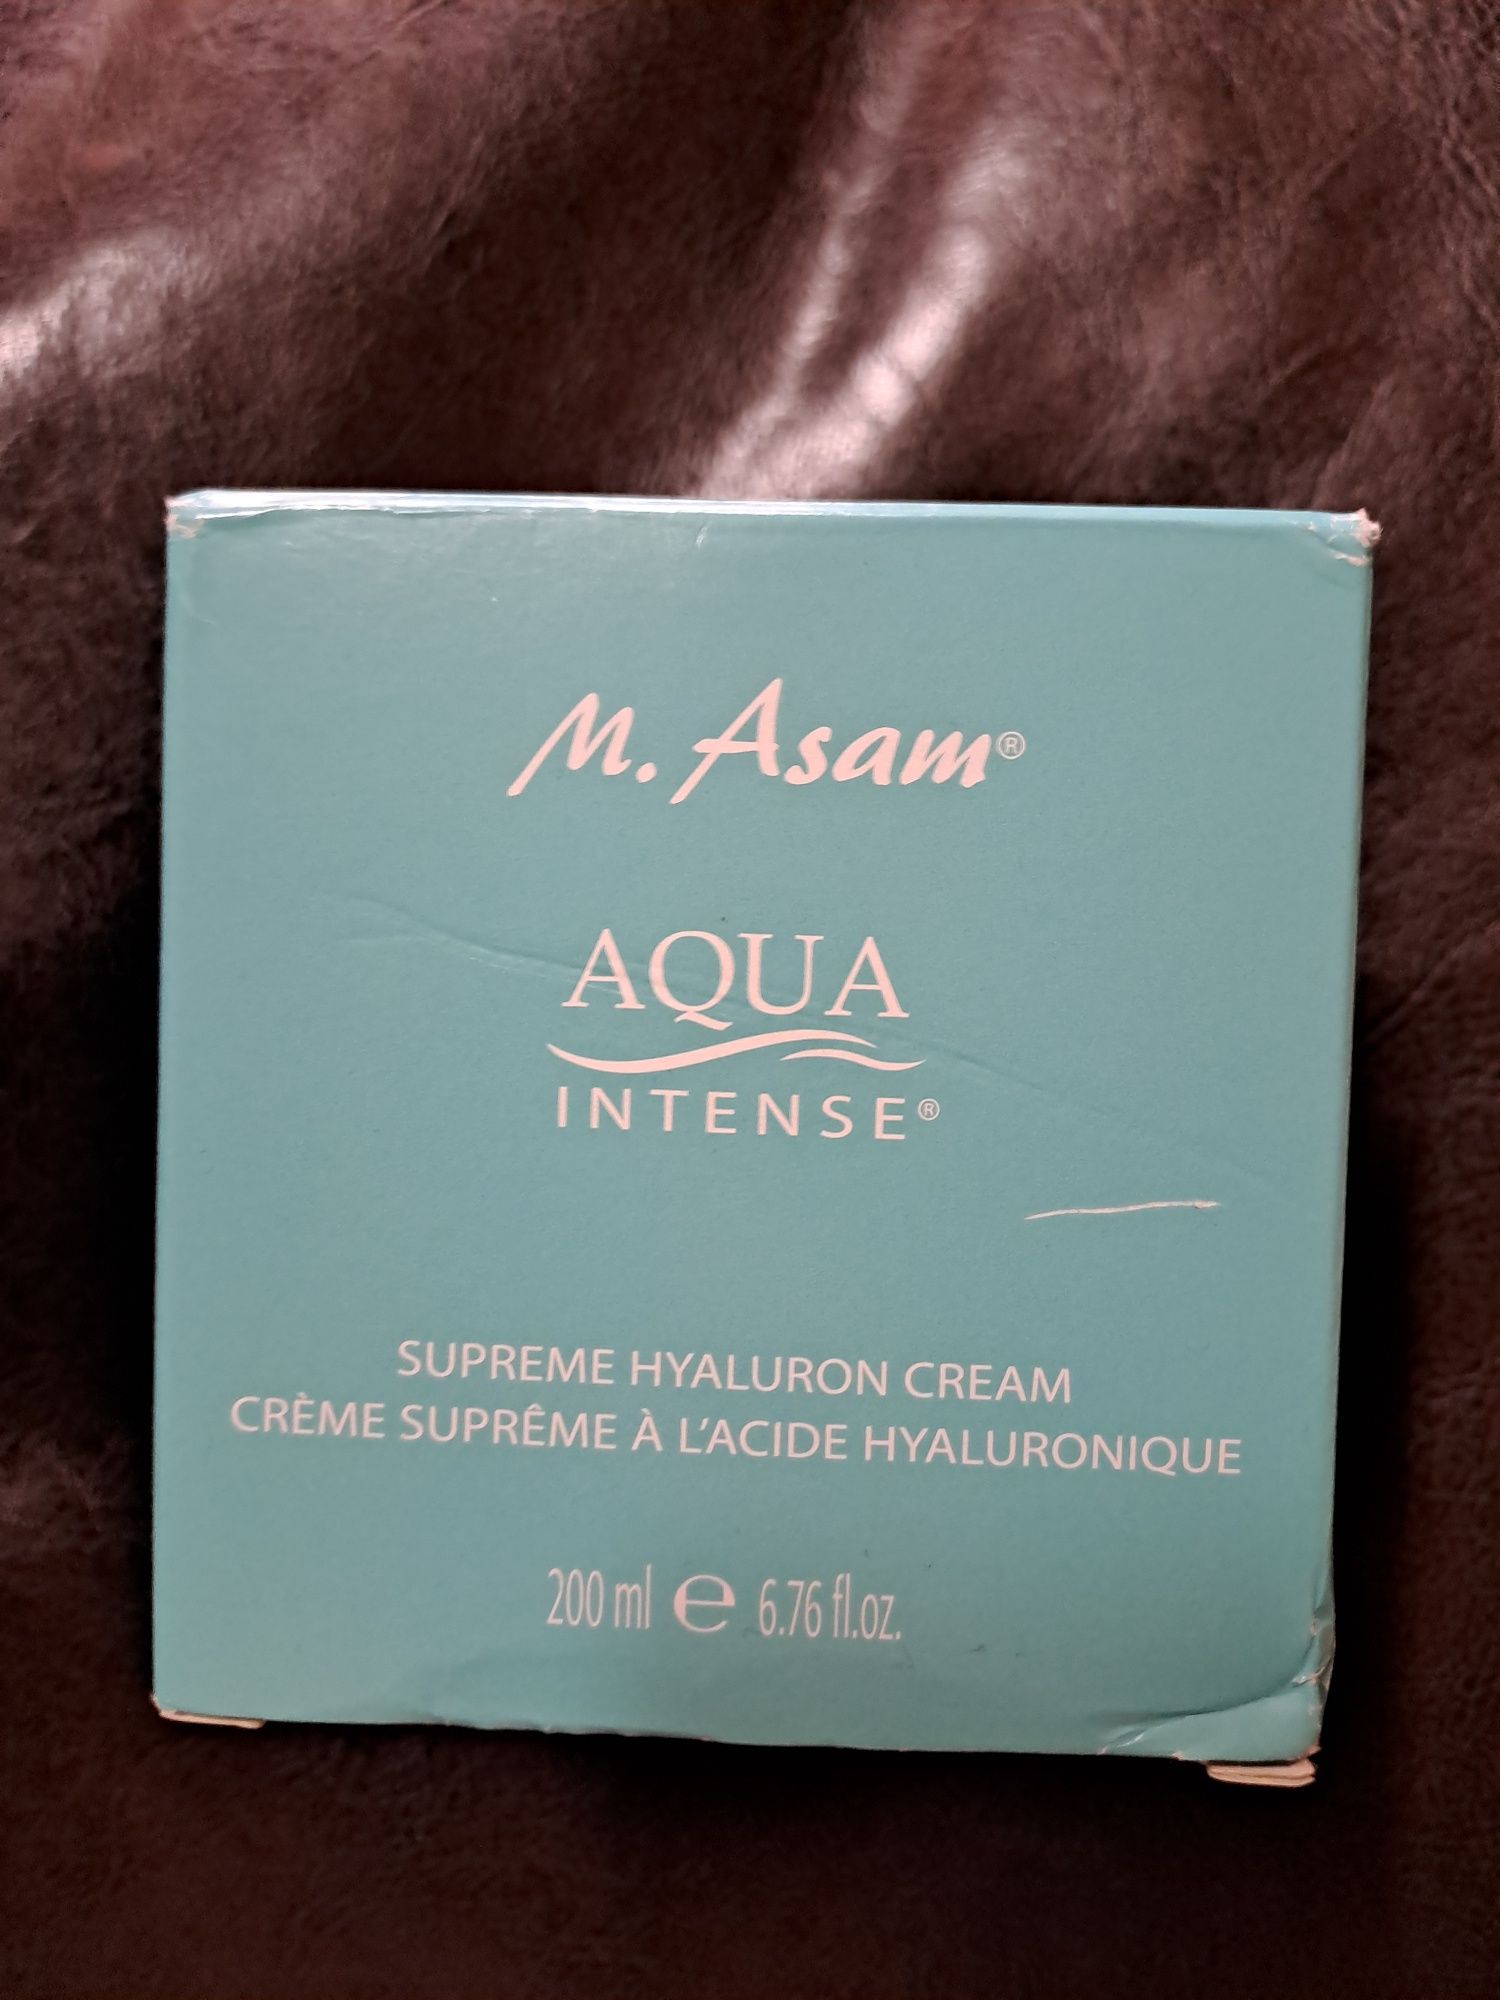 Aqua Intense Hyaluron Cream